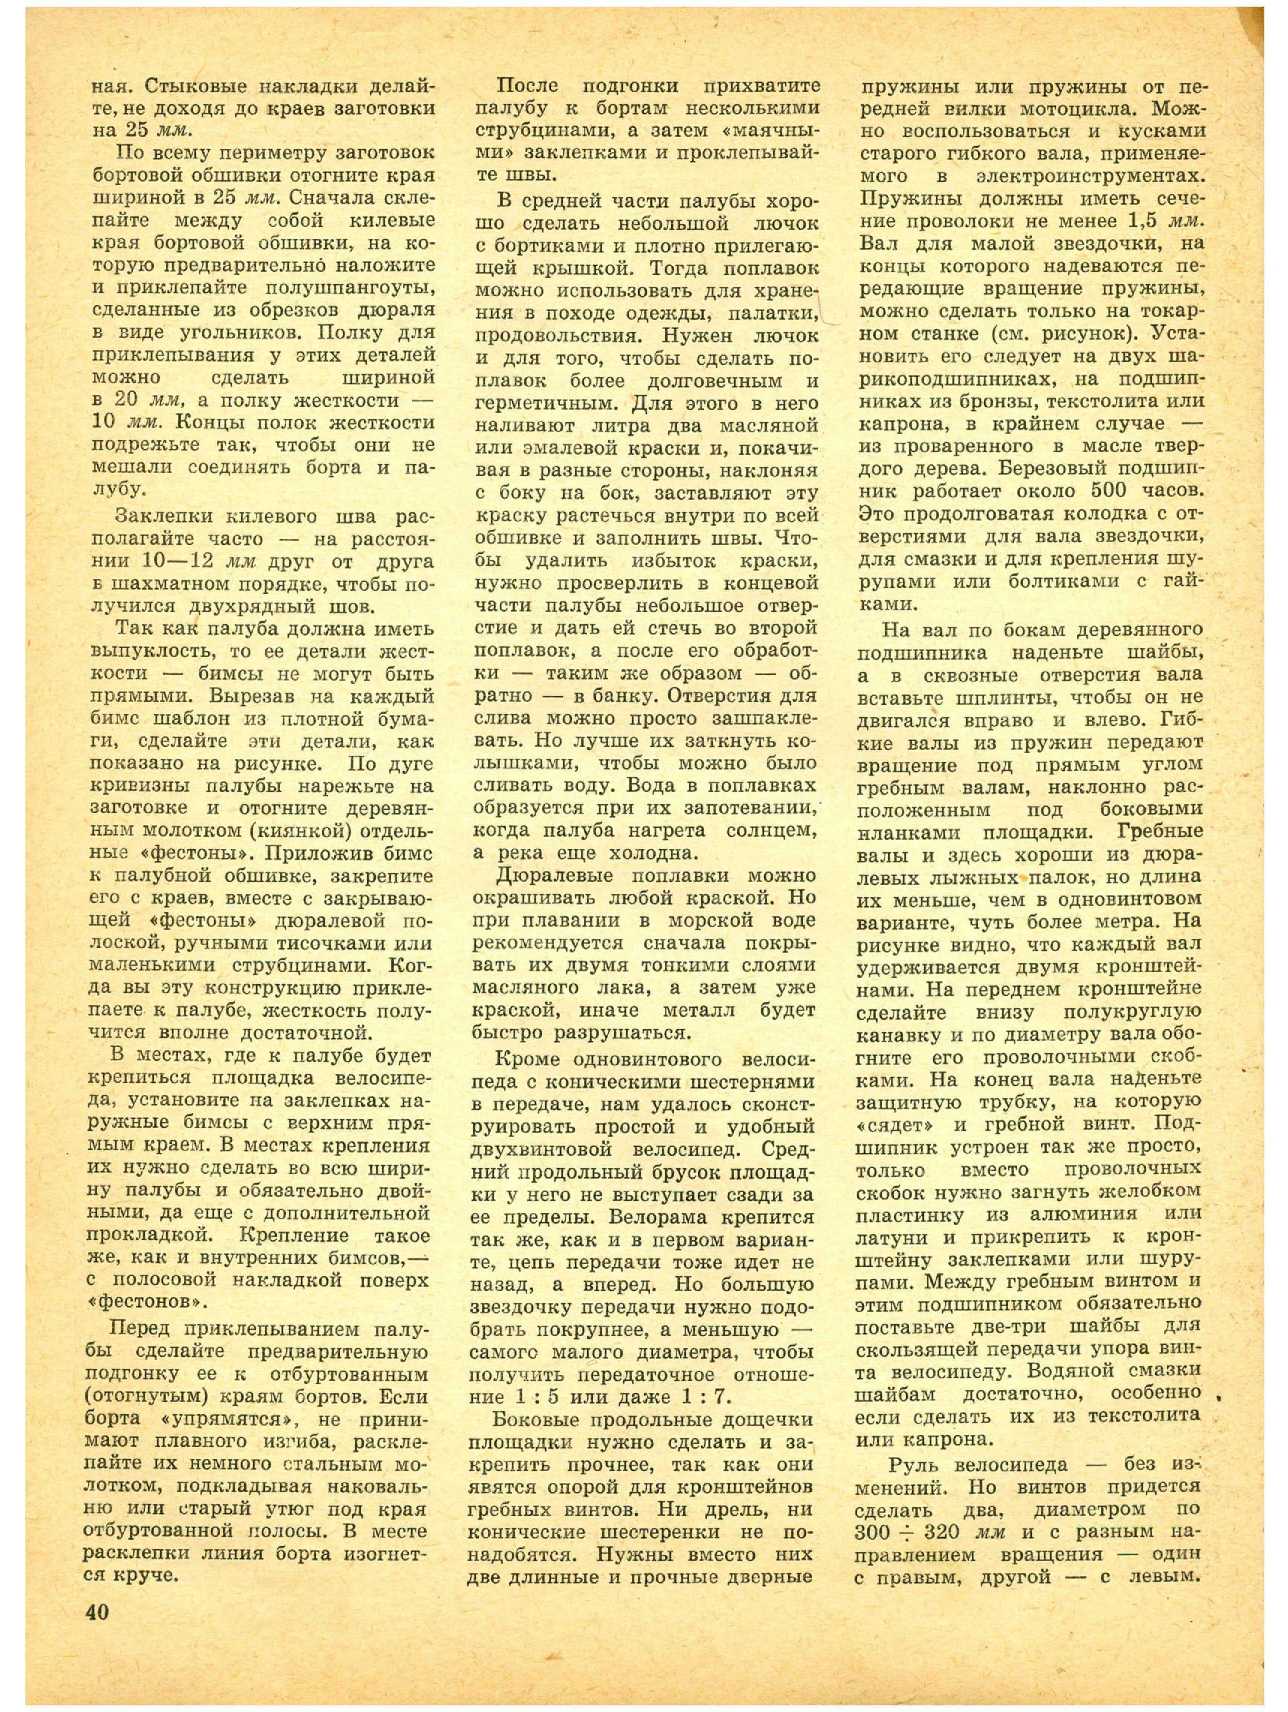 ЮМК 13, 1965, 40 c.